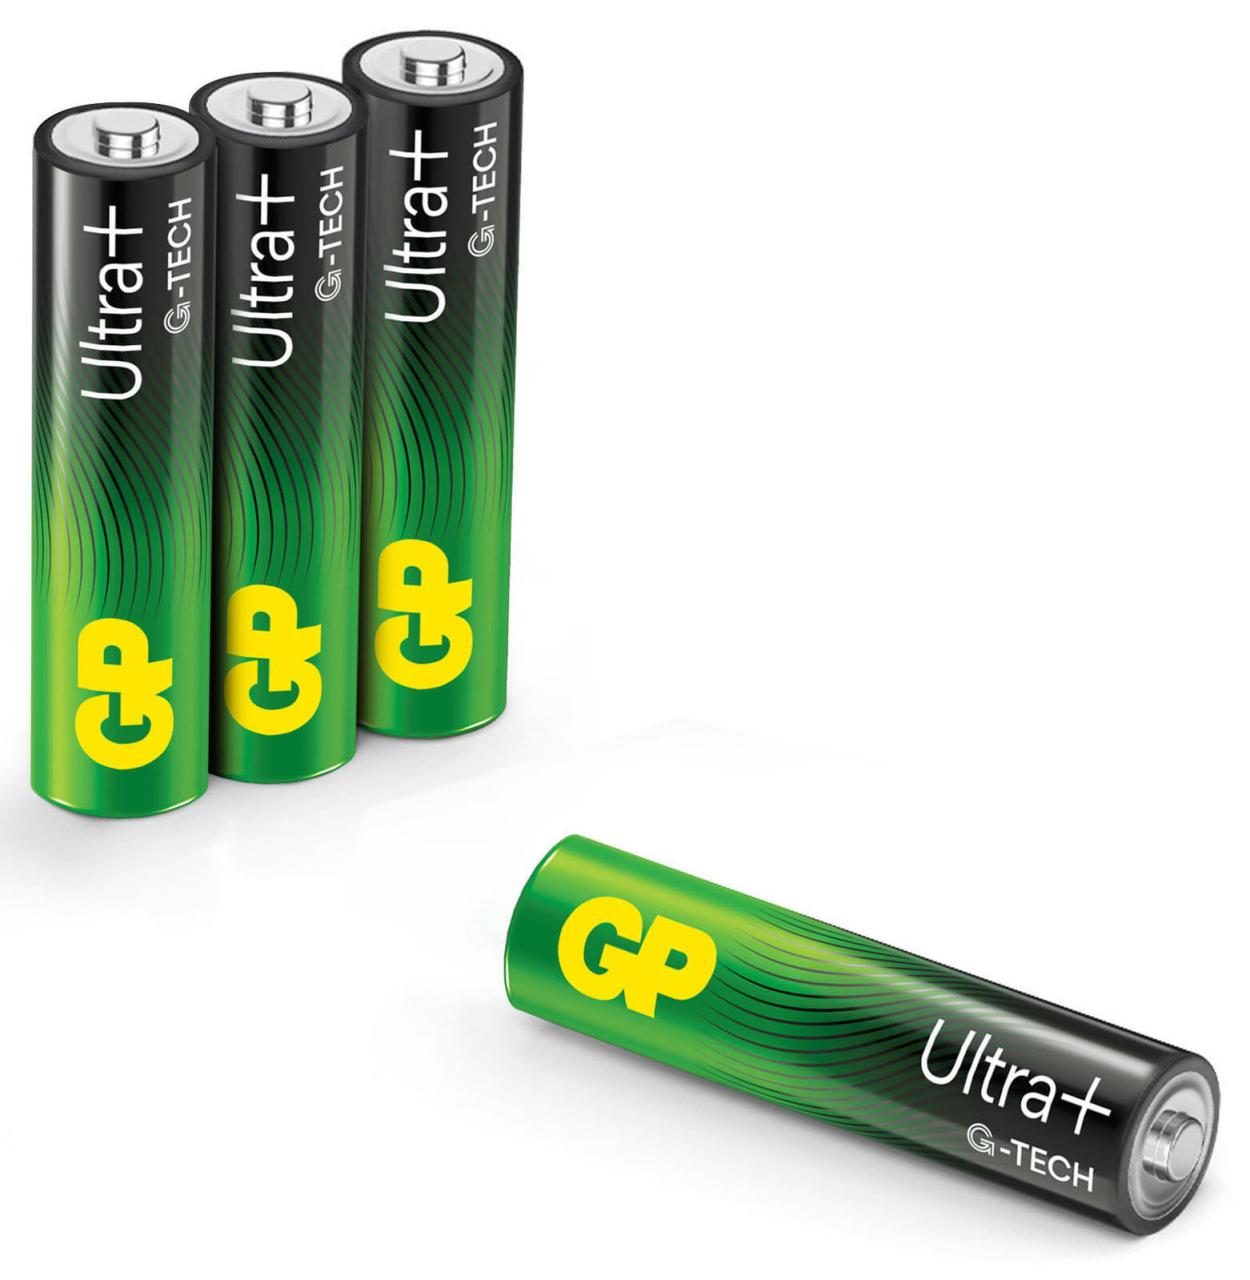 GP Batterie Micro AAA 1.5 V von GP